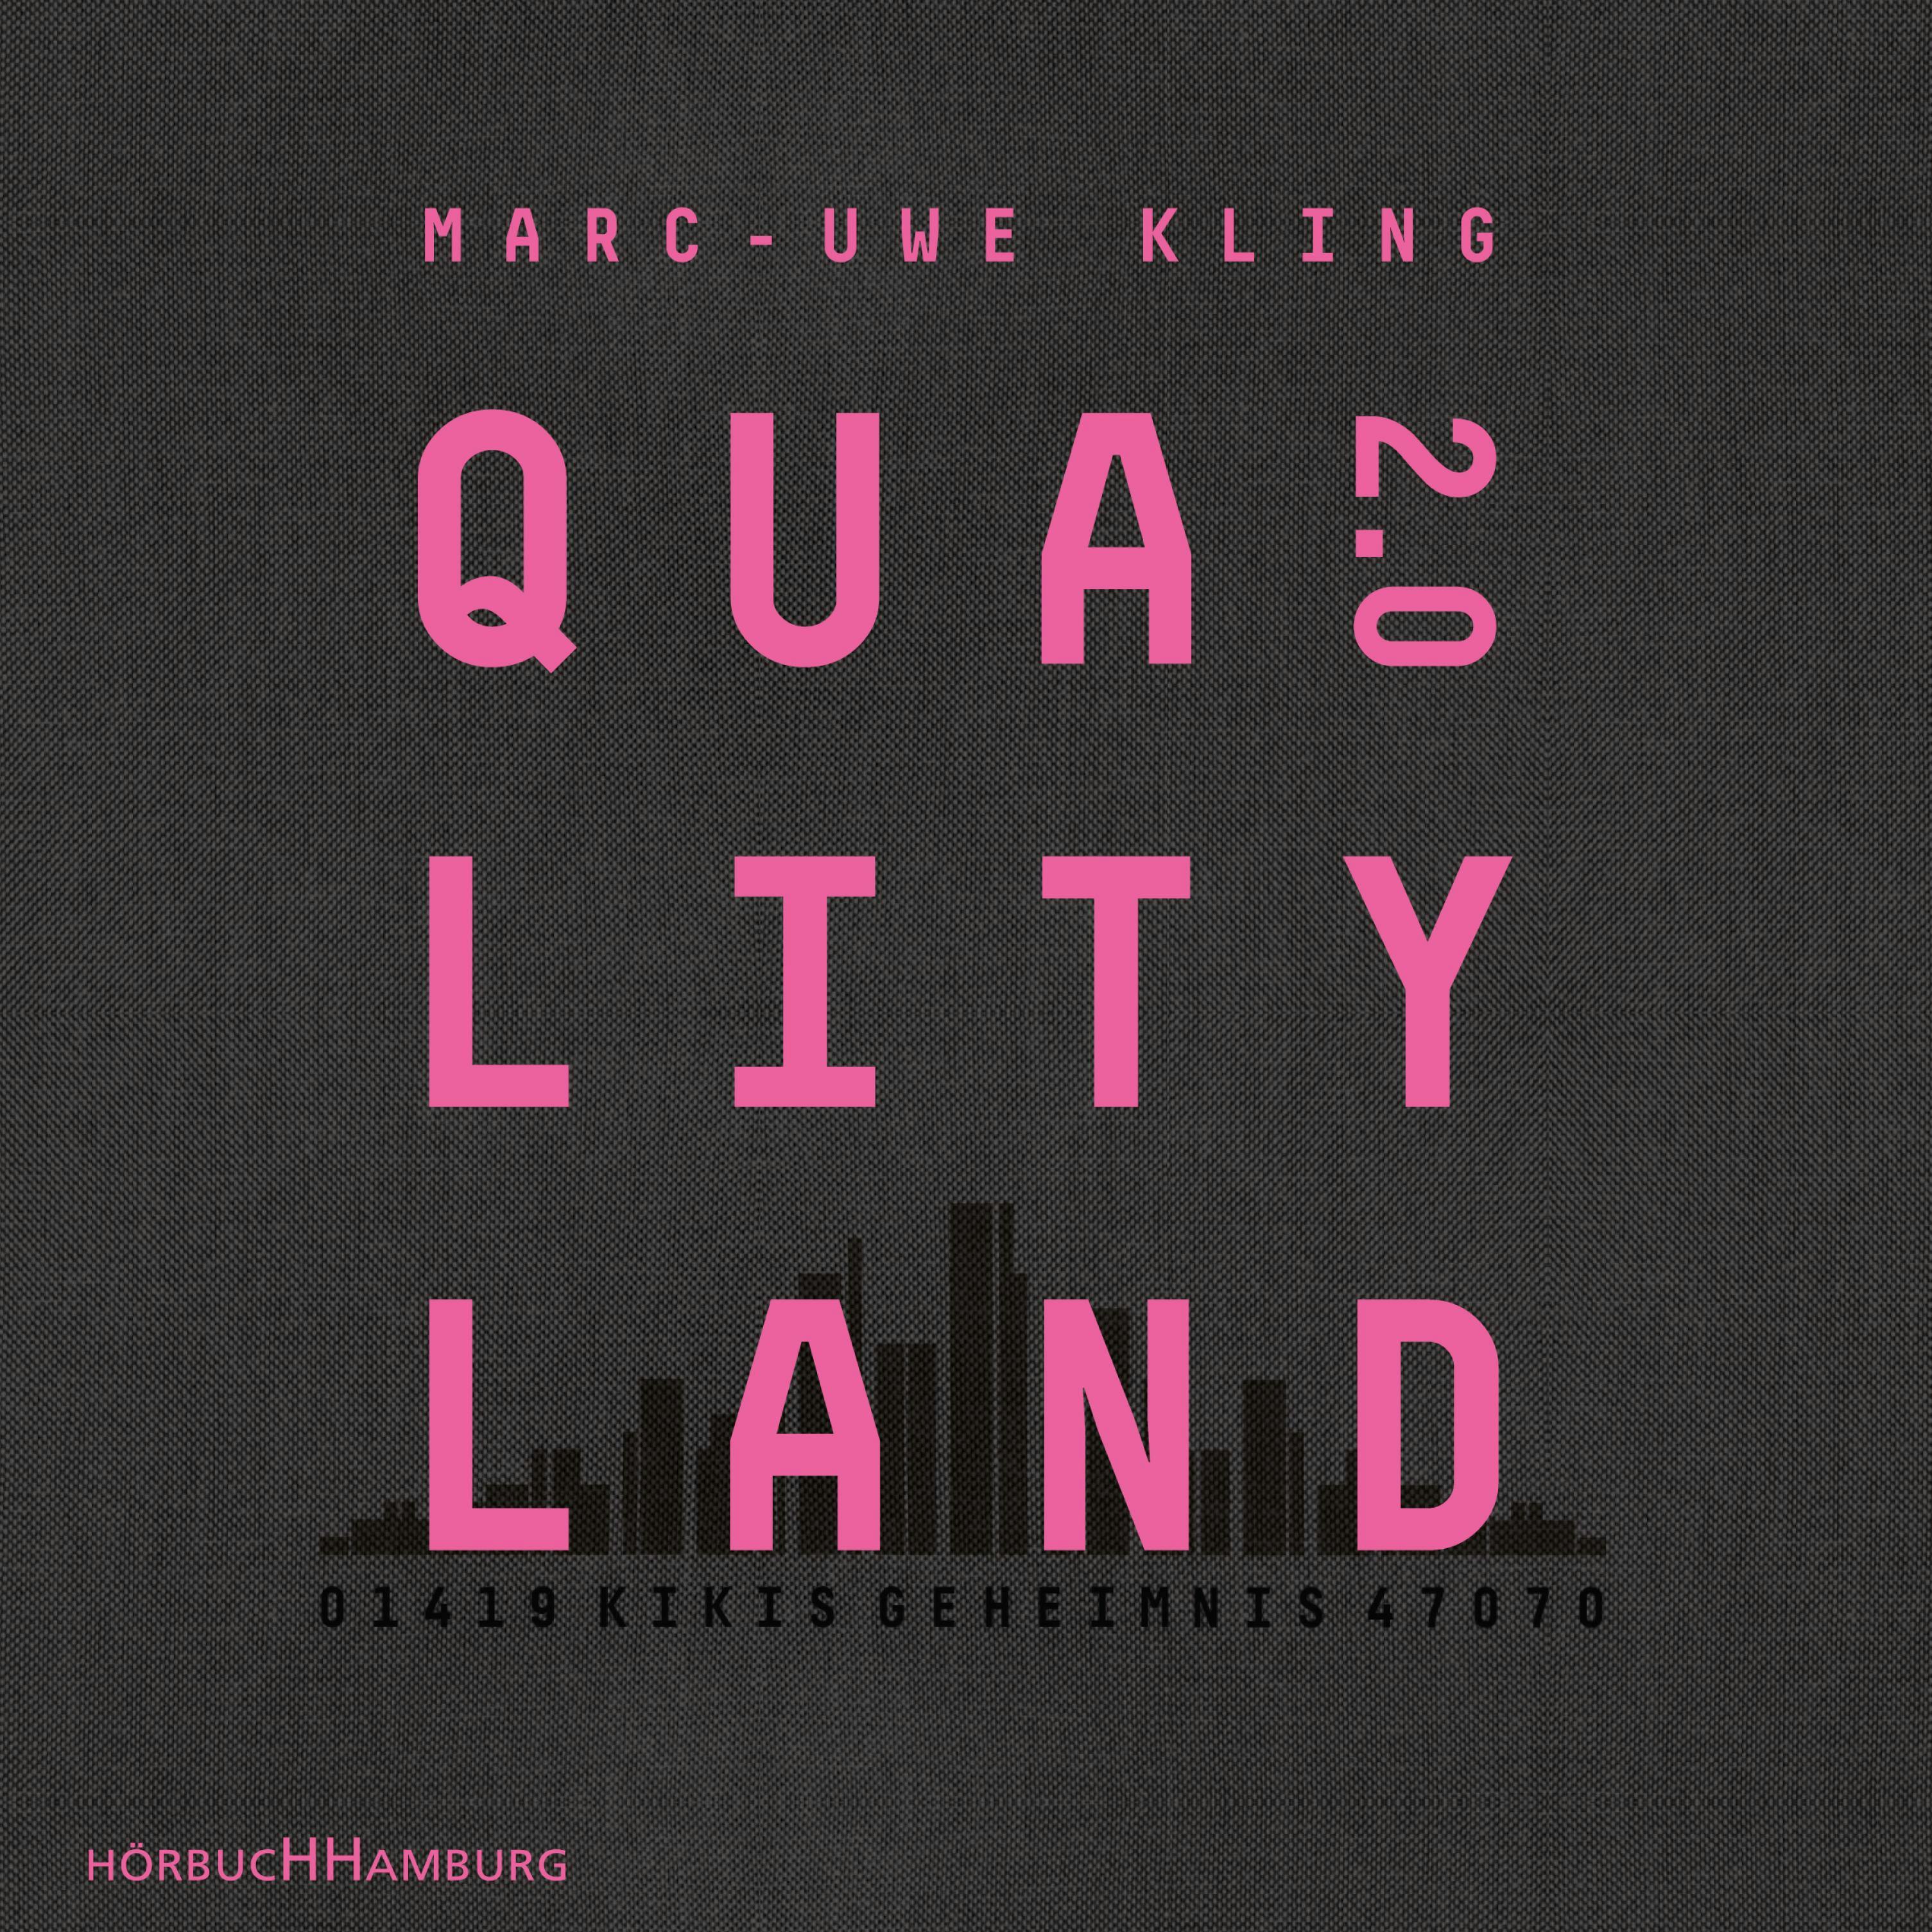 QualityLand 2.0: Kikis Geheimnis - Marc-Uwe Kling